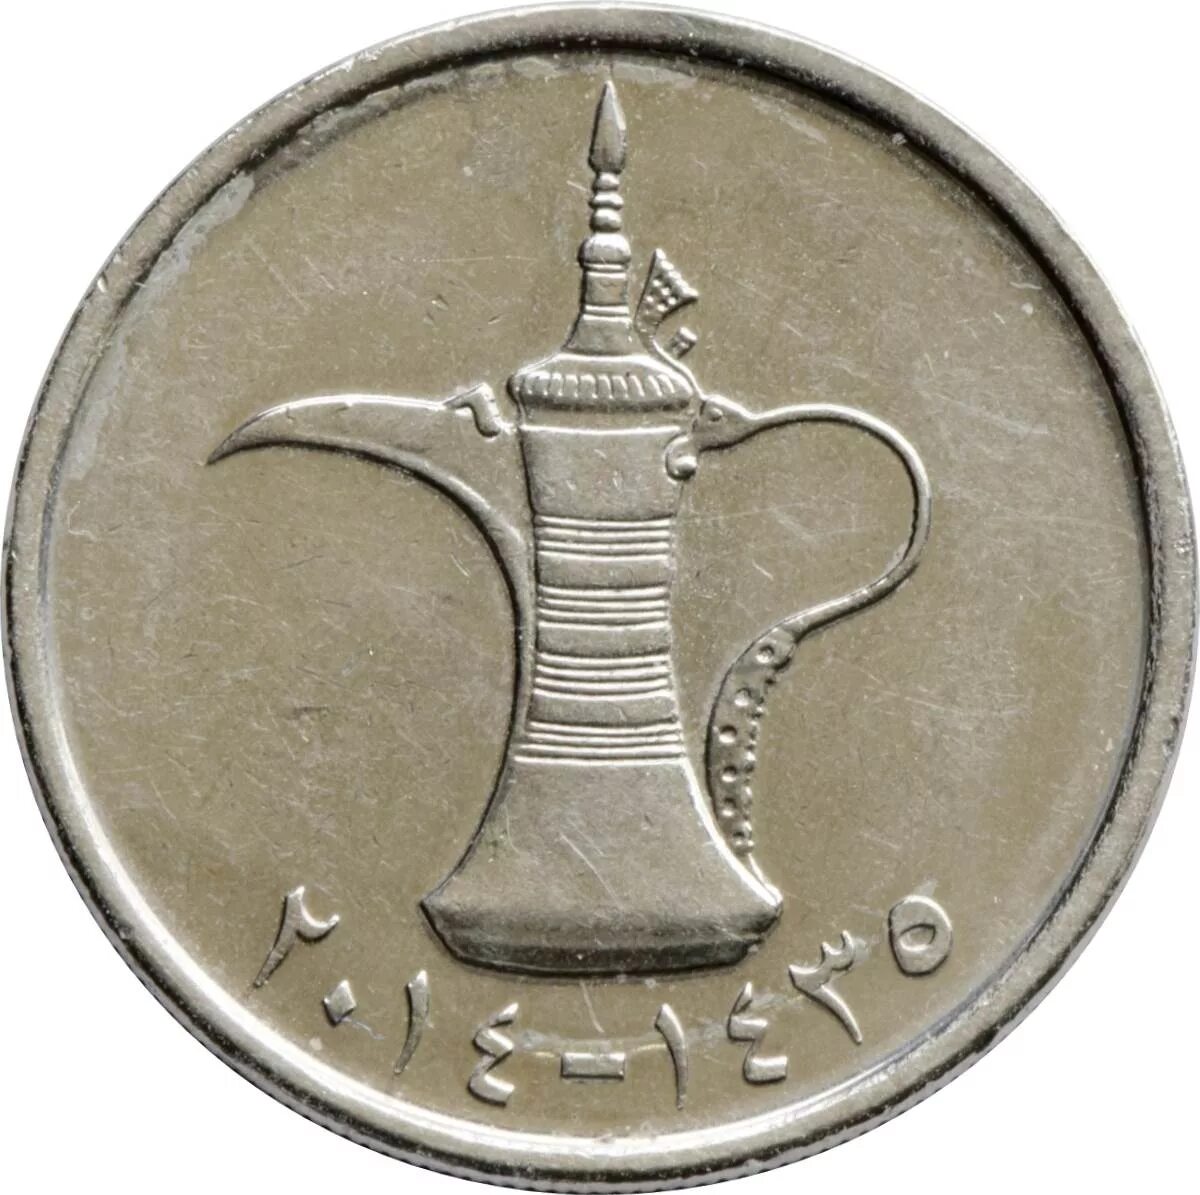 69 дирхам. Монета арабская United arab Emirates. United arab Emirates монета. United arab Emirates монета 1. Монеты ОАЭ 1 дирхам.